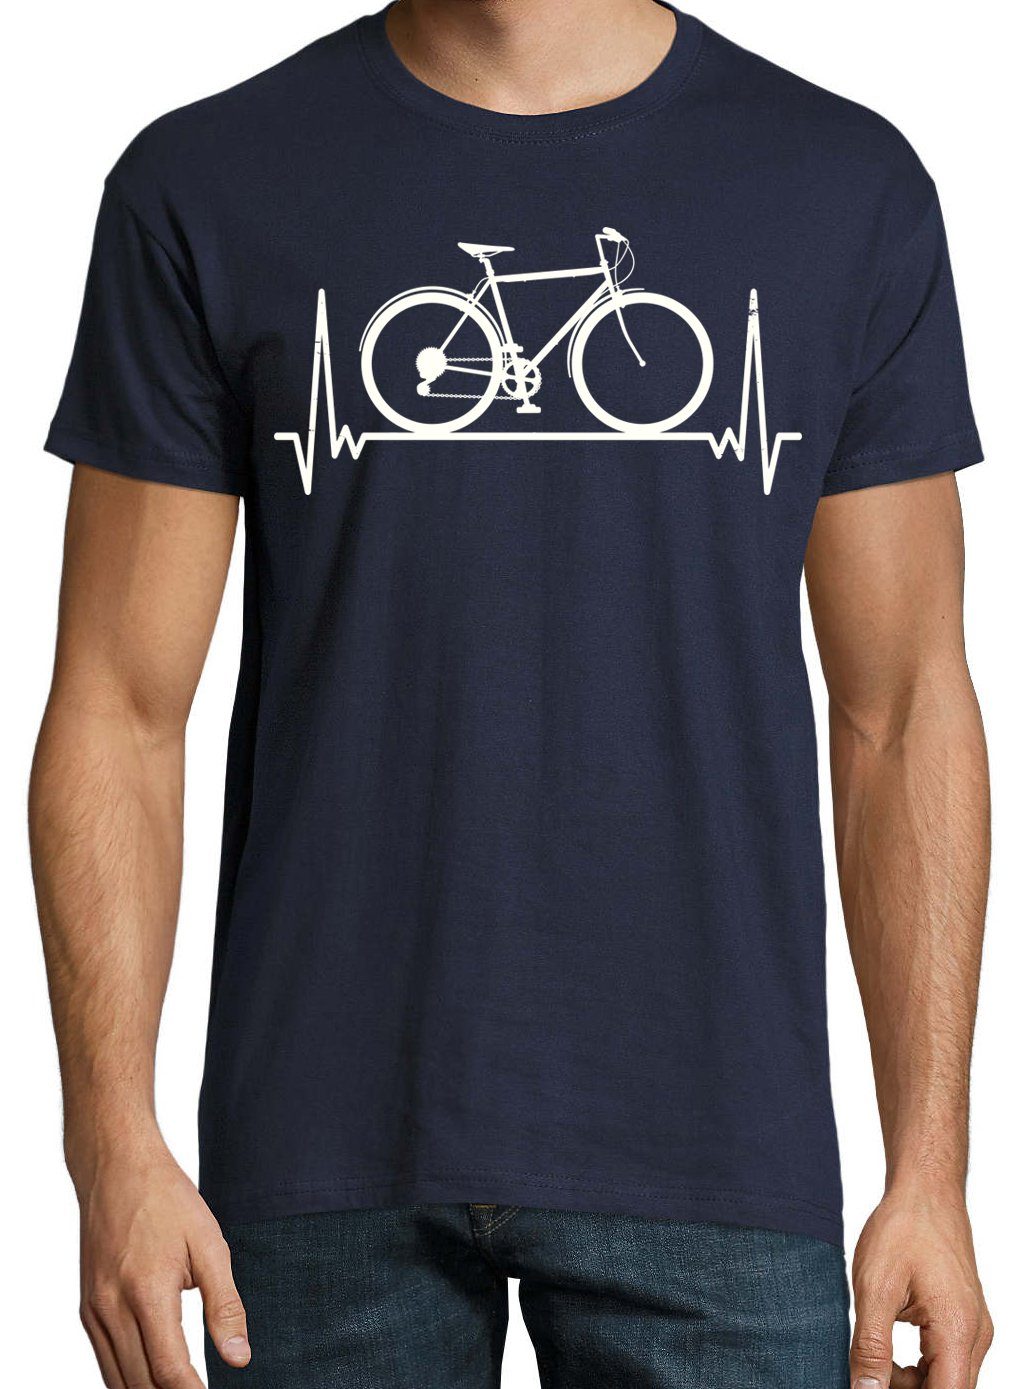 Shirt Heartbeat Navyblau Frontprint Fahrrad Herren Youth lustigem Designz T-Shirt Fahrrad mit